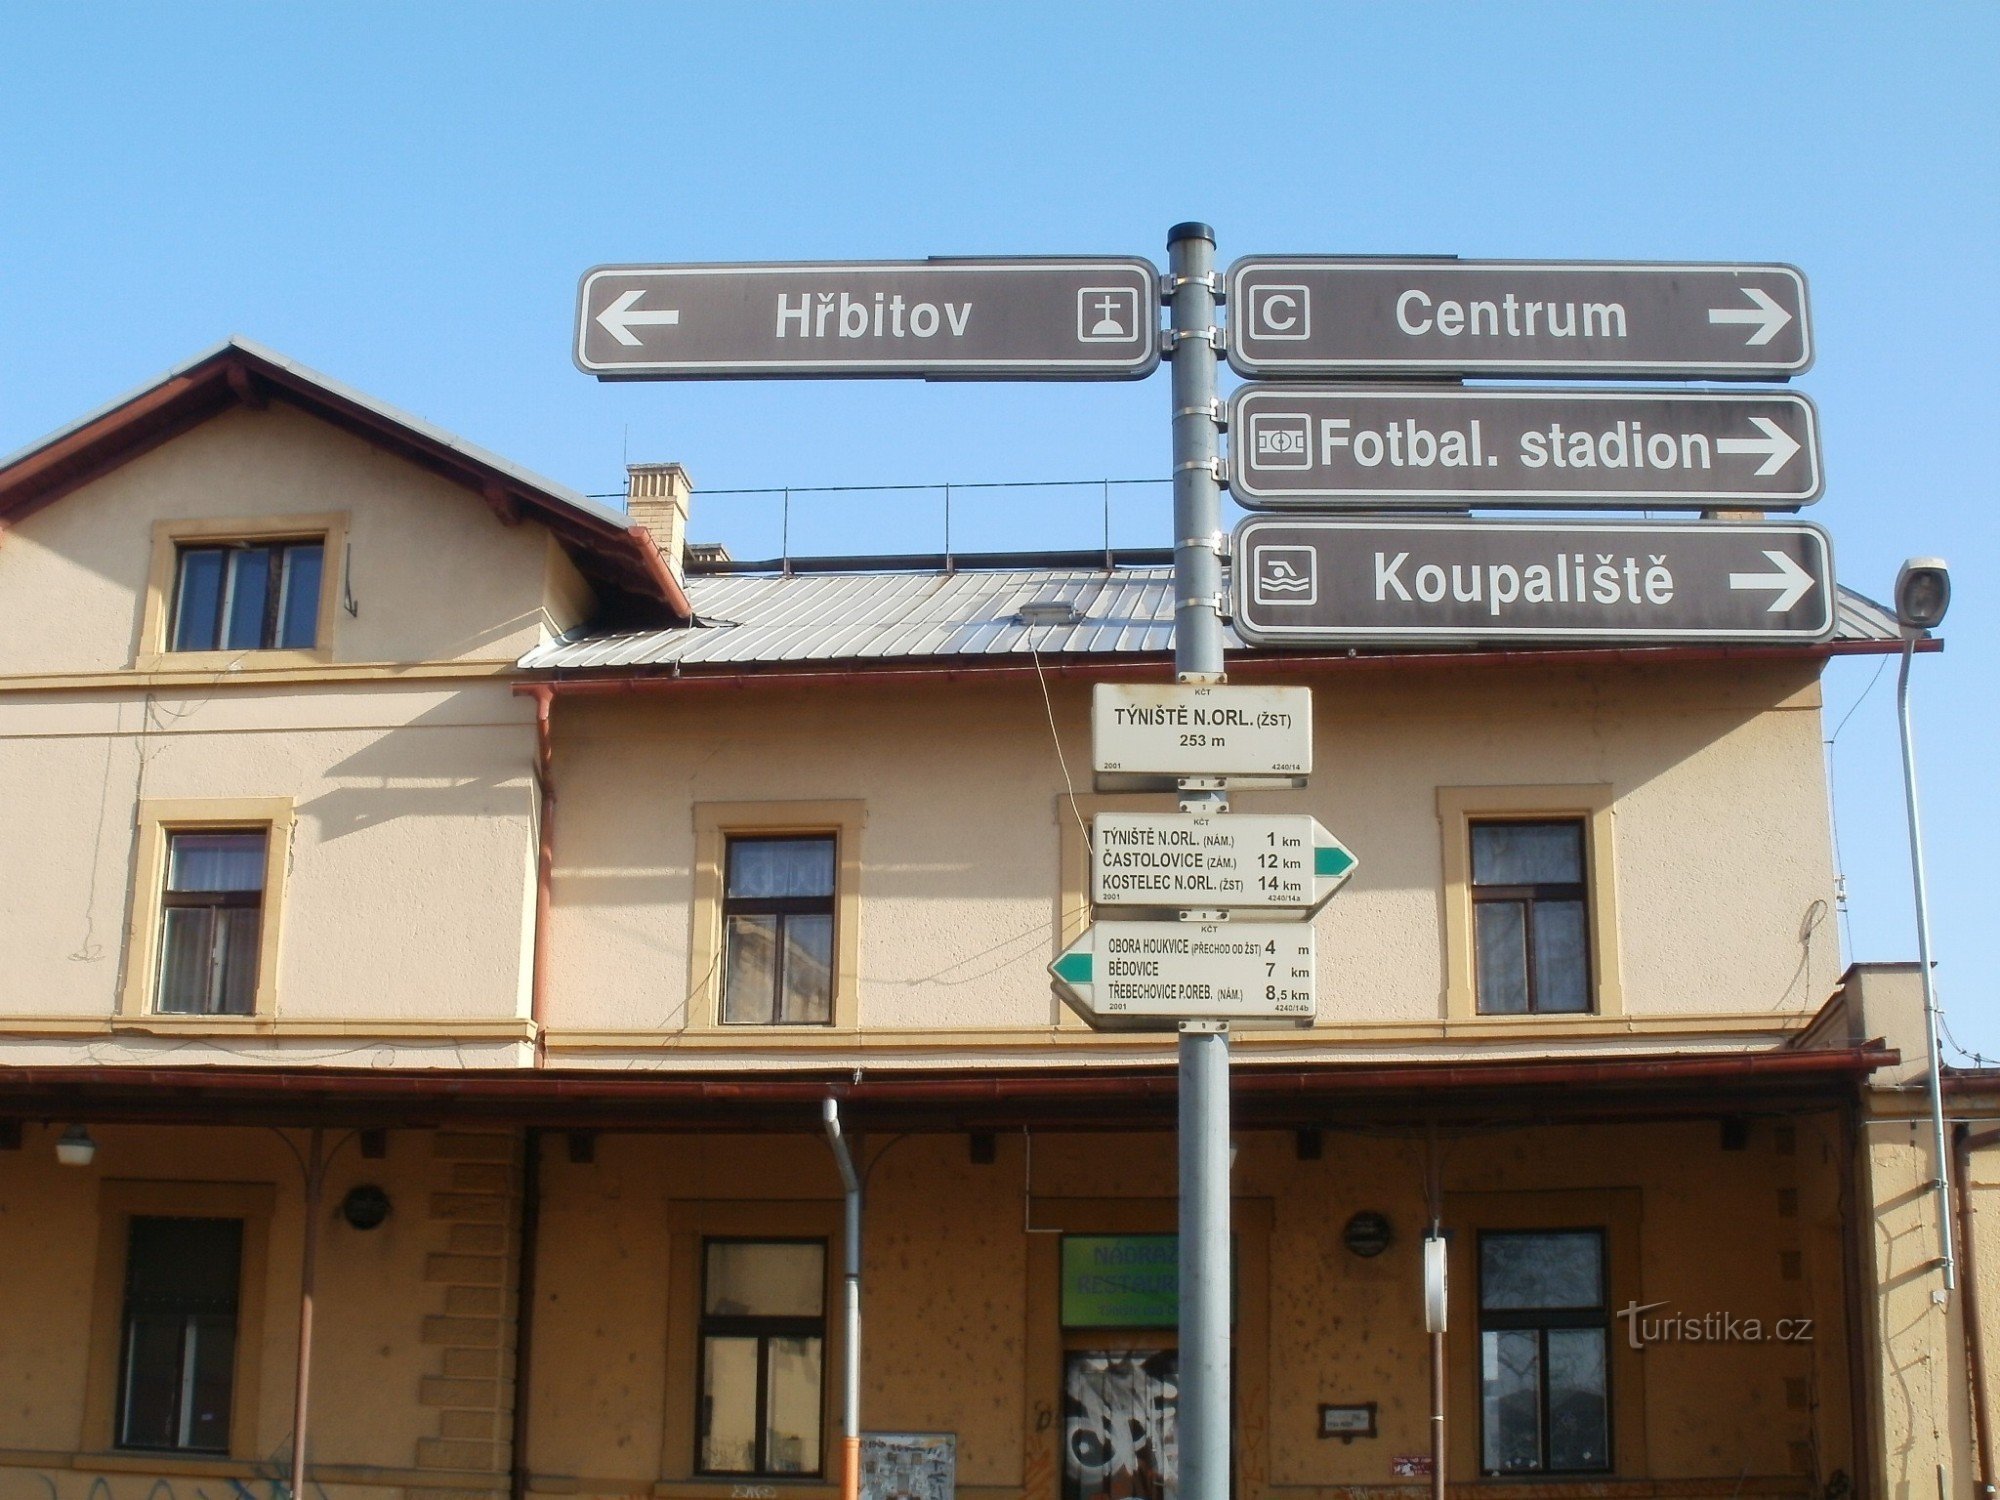 toeristisch knooppunt Týniště nad Orlicí - treinstation